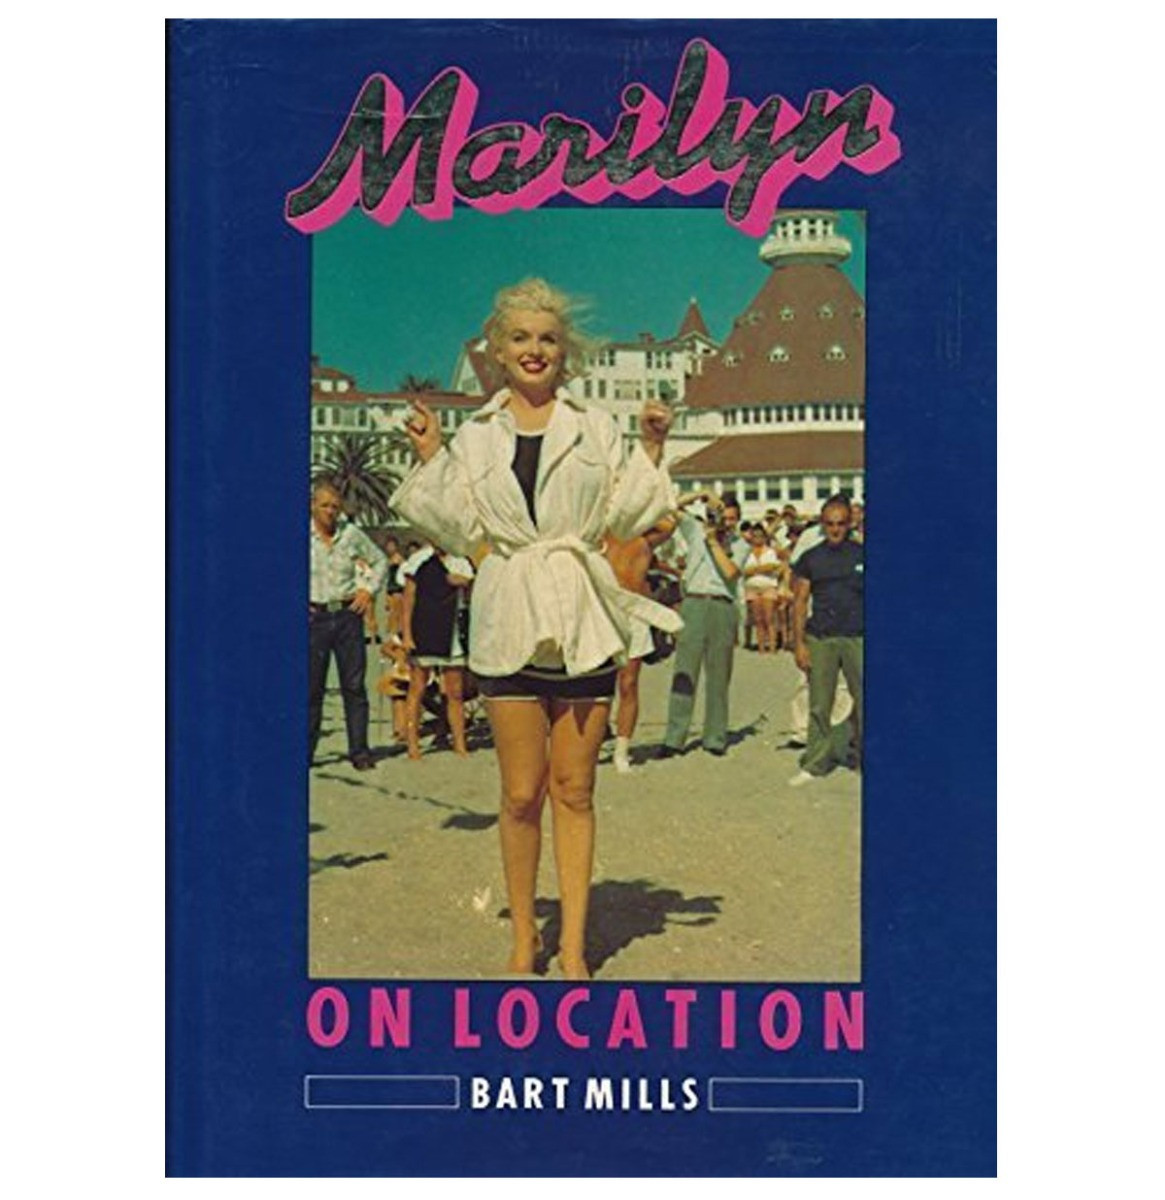 Marilyn Monroe - Marilyn On Location Boek Hardcover Collectible